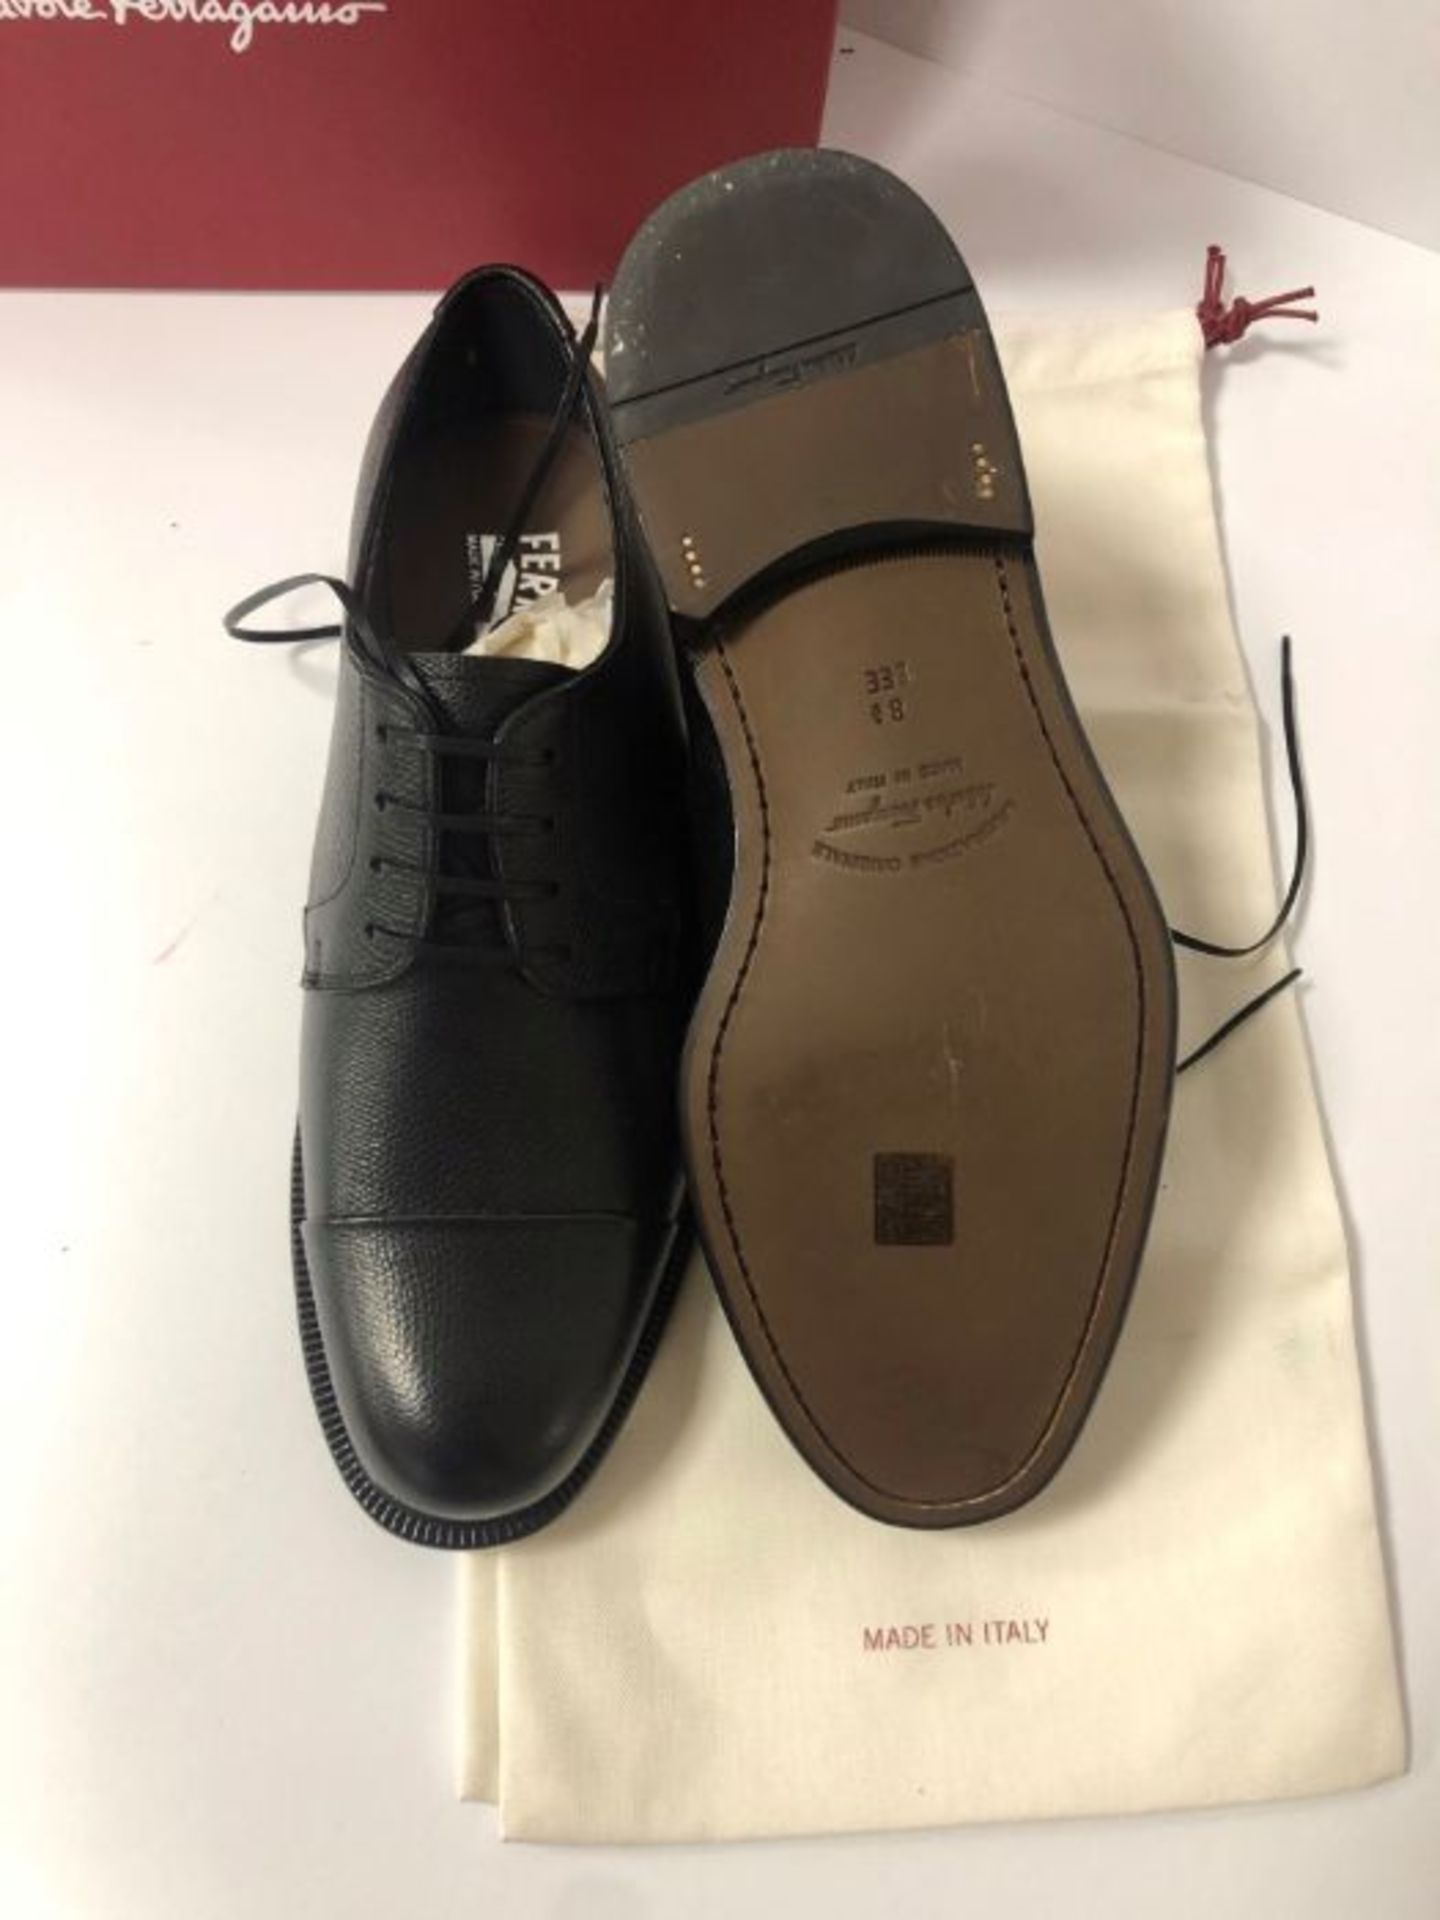 Men's Salvatore Ferragamo Regal Derby Shoe, Black Leather, UK 7.5 - Image 2 of 3